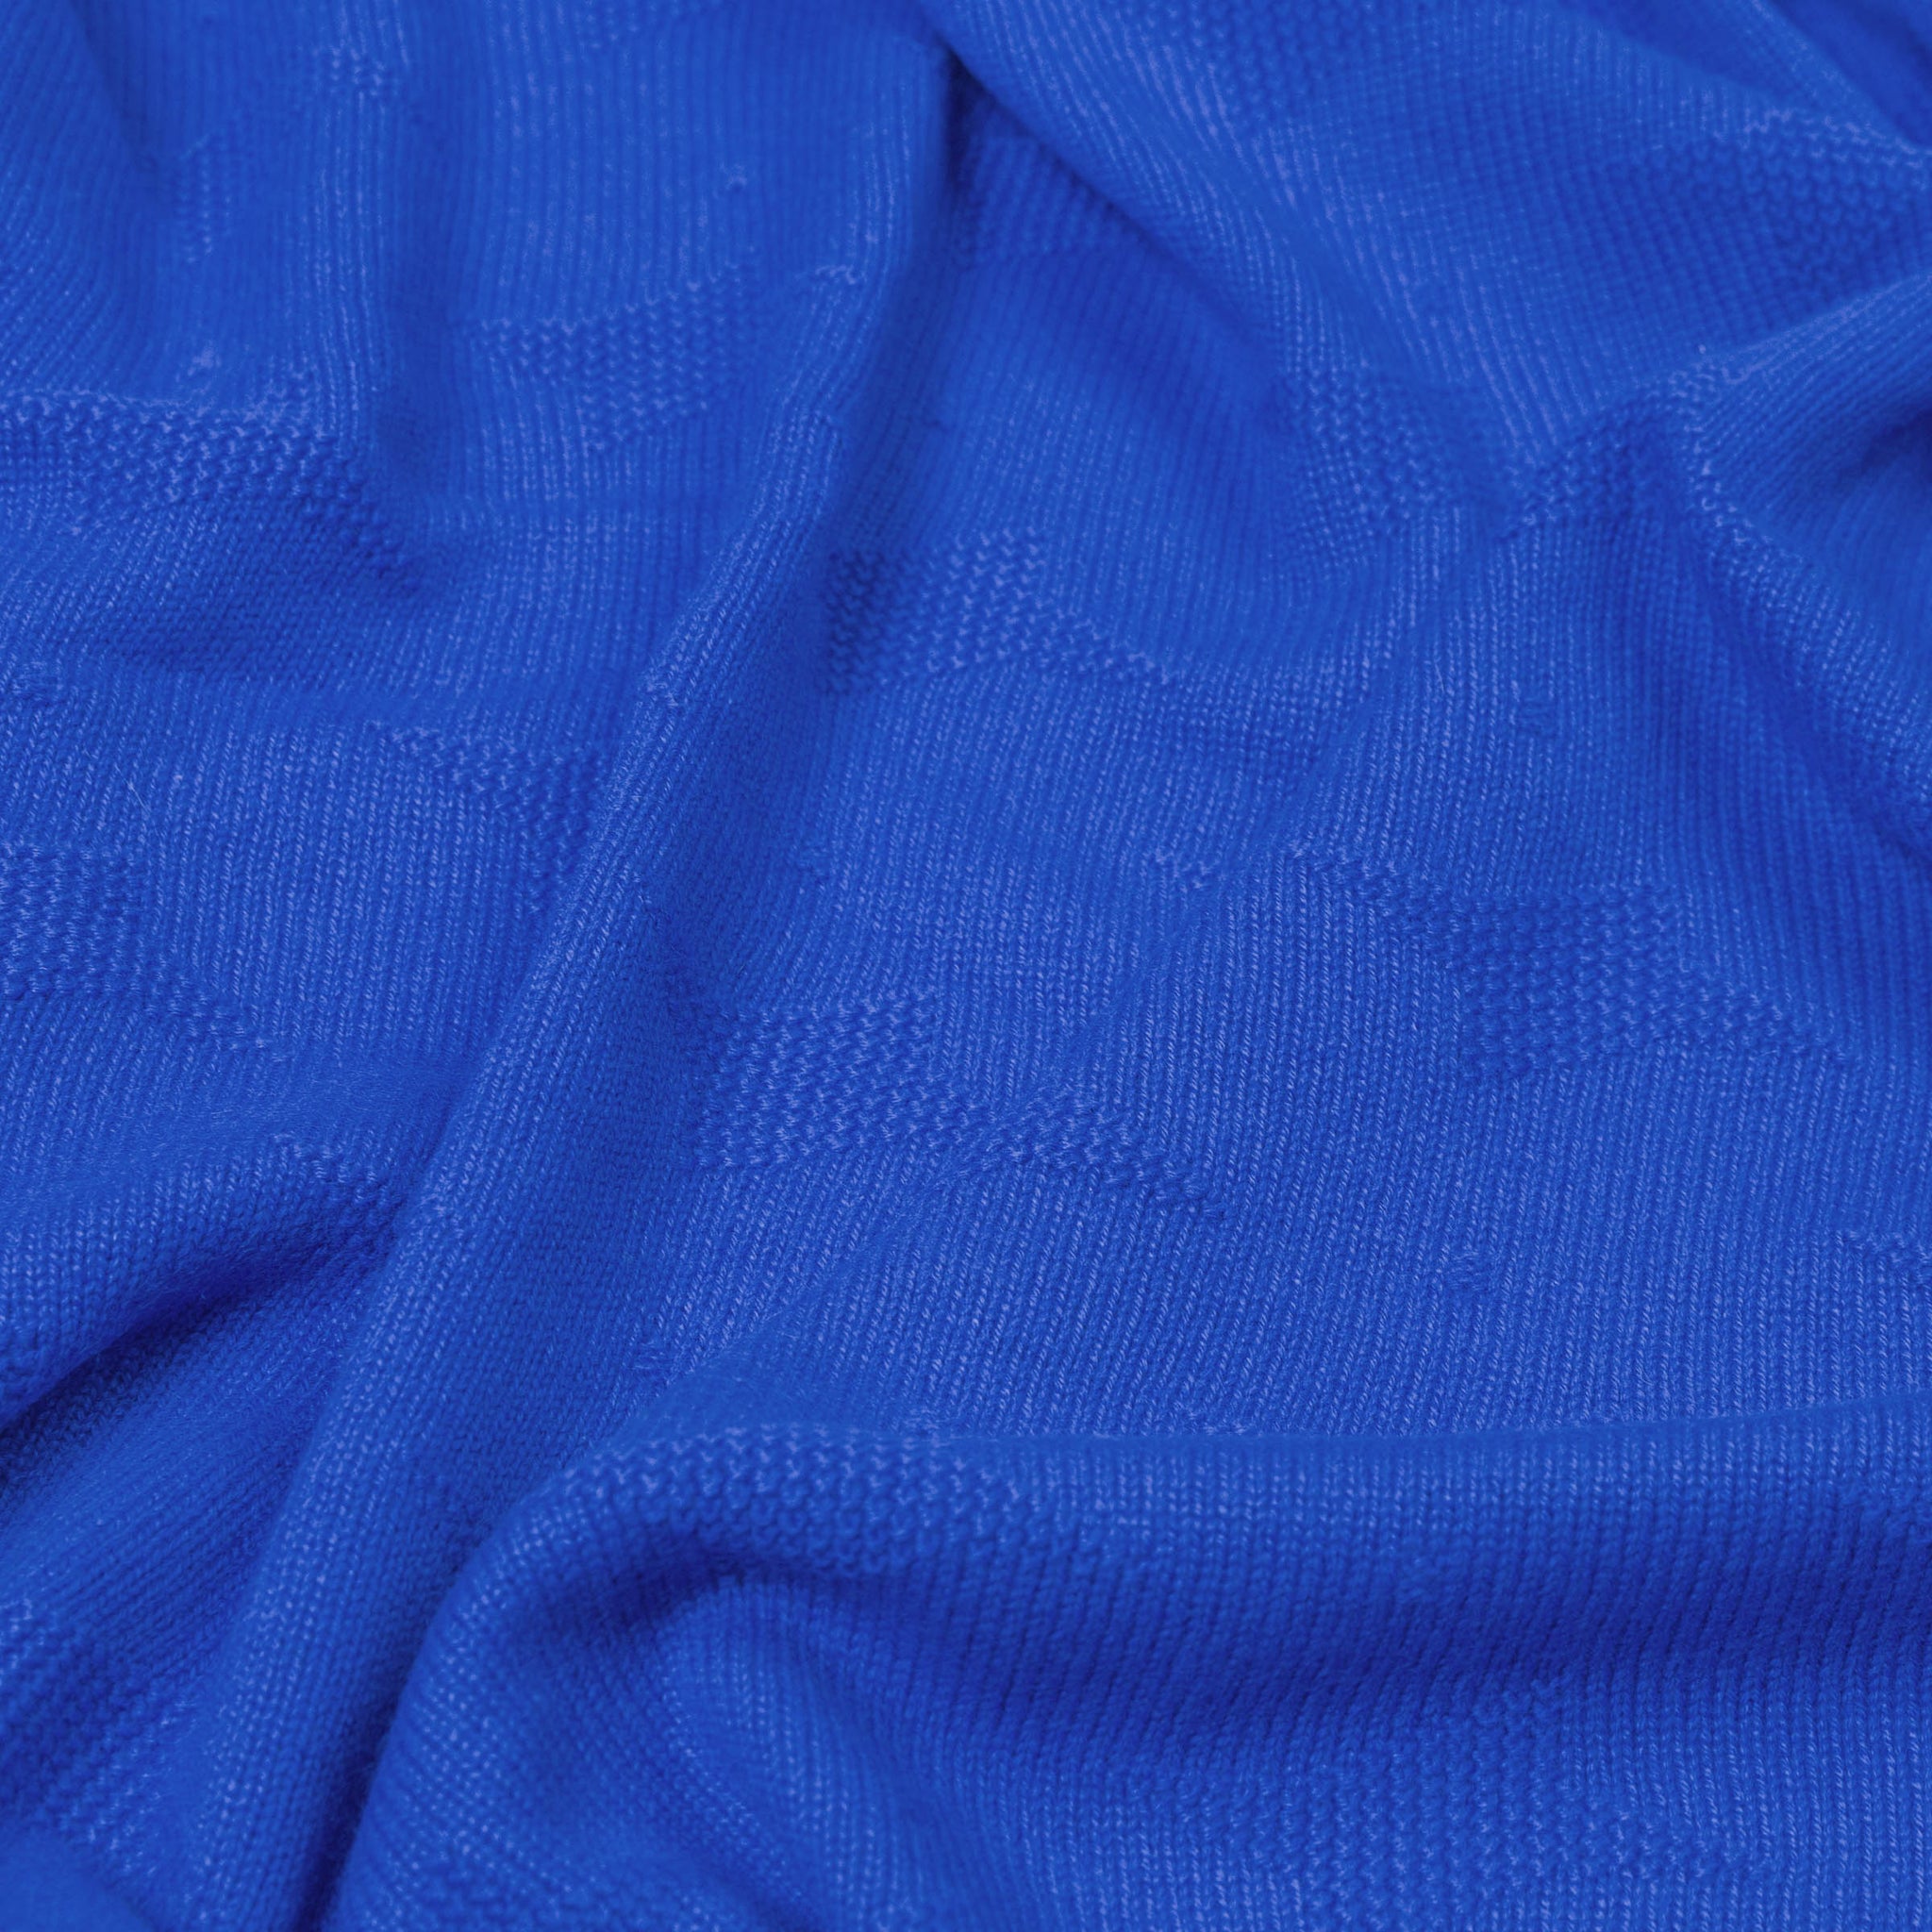 Capri Star Blue Cashmere Blanket